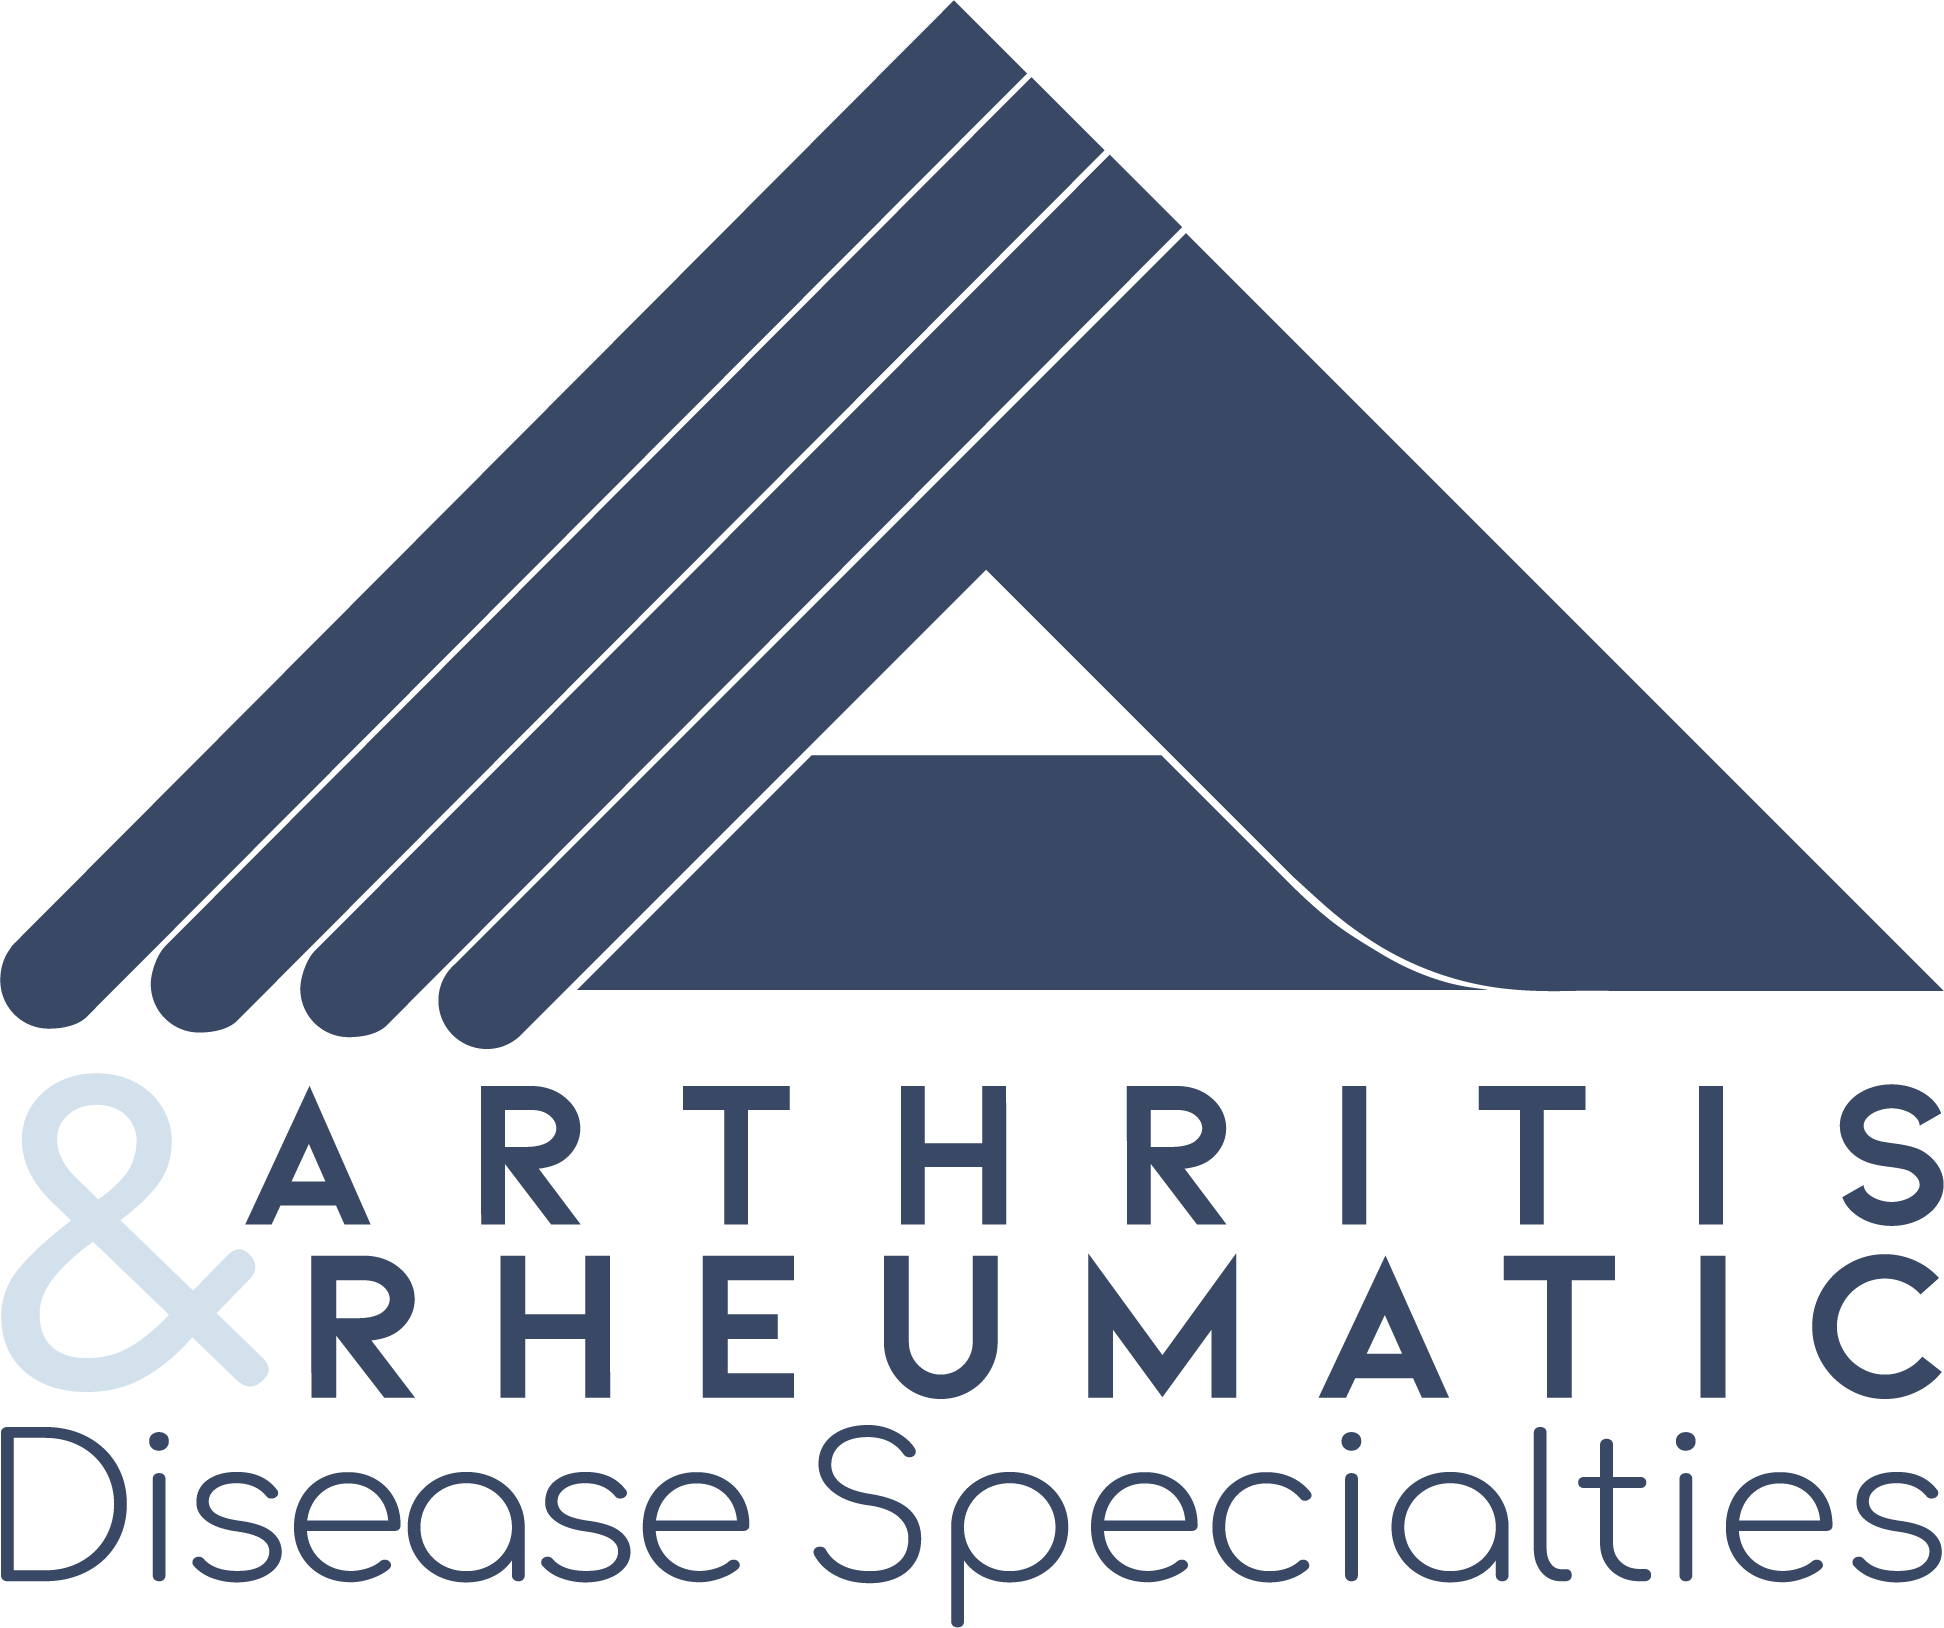 Arthritis & Rheumatic Disease Specialties, Florida, Aventura, Arthritis & Rheumatic Disease Specialties Final Logo